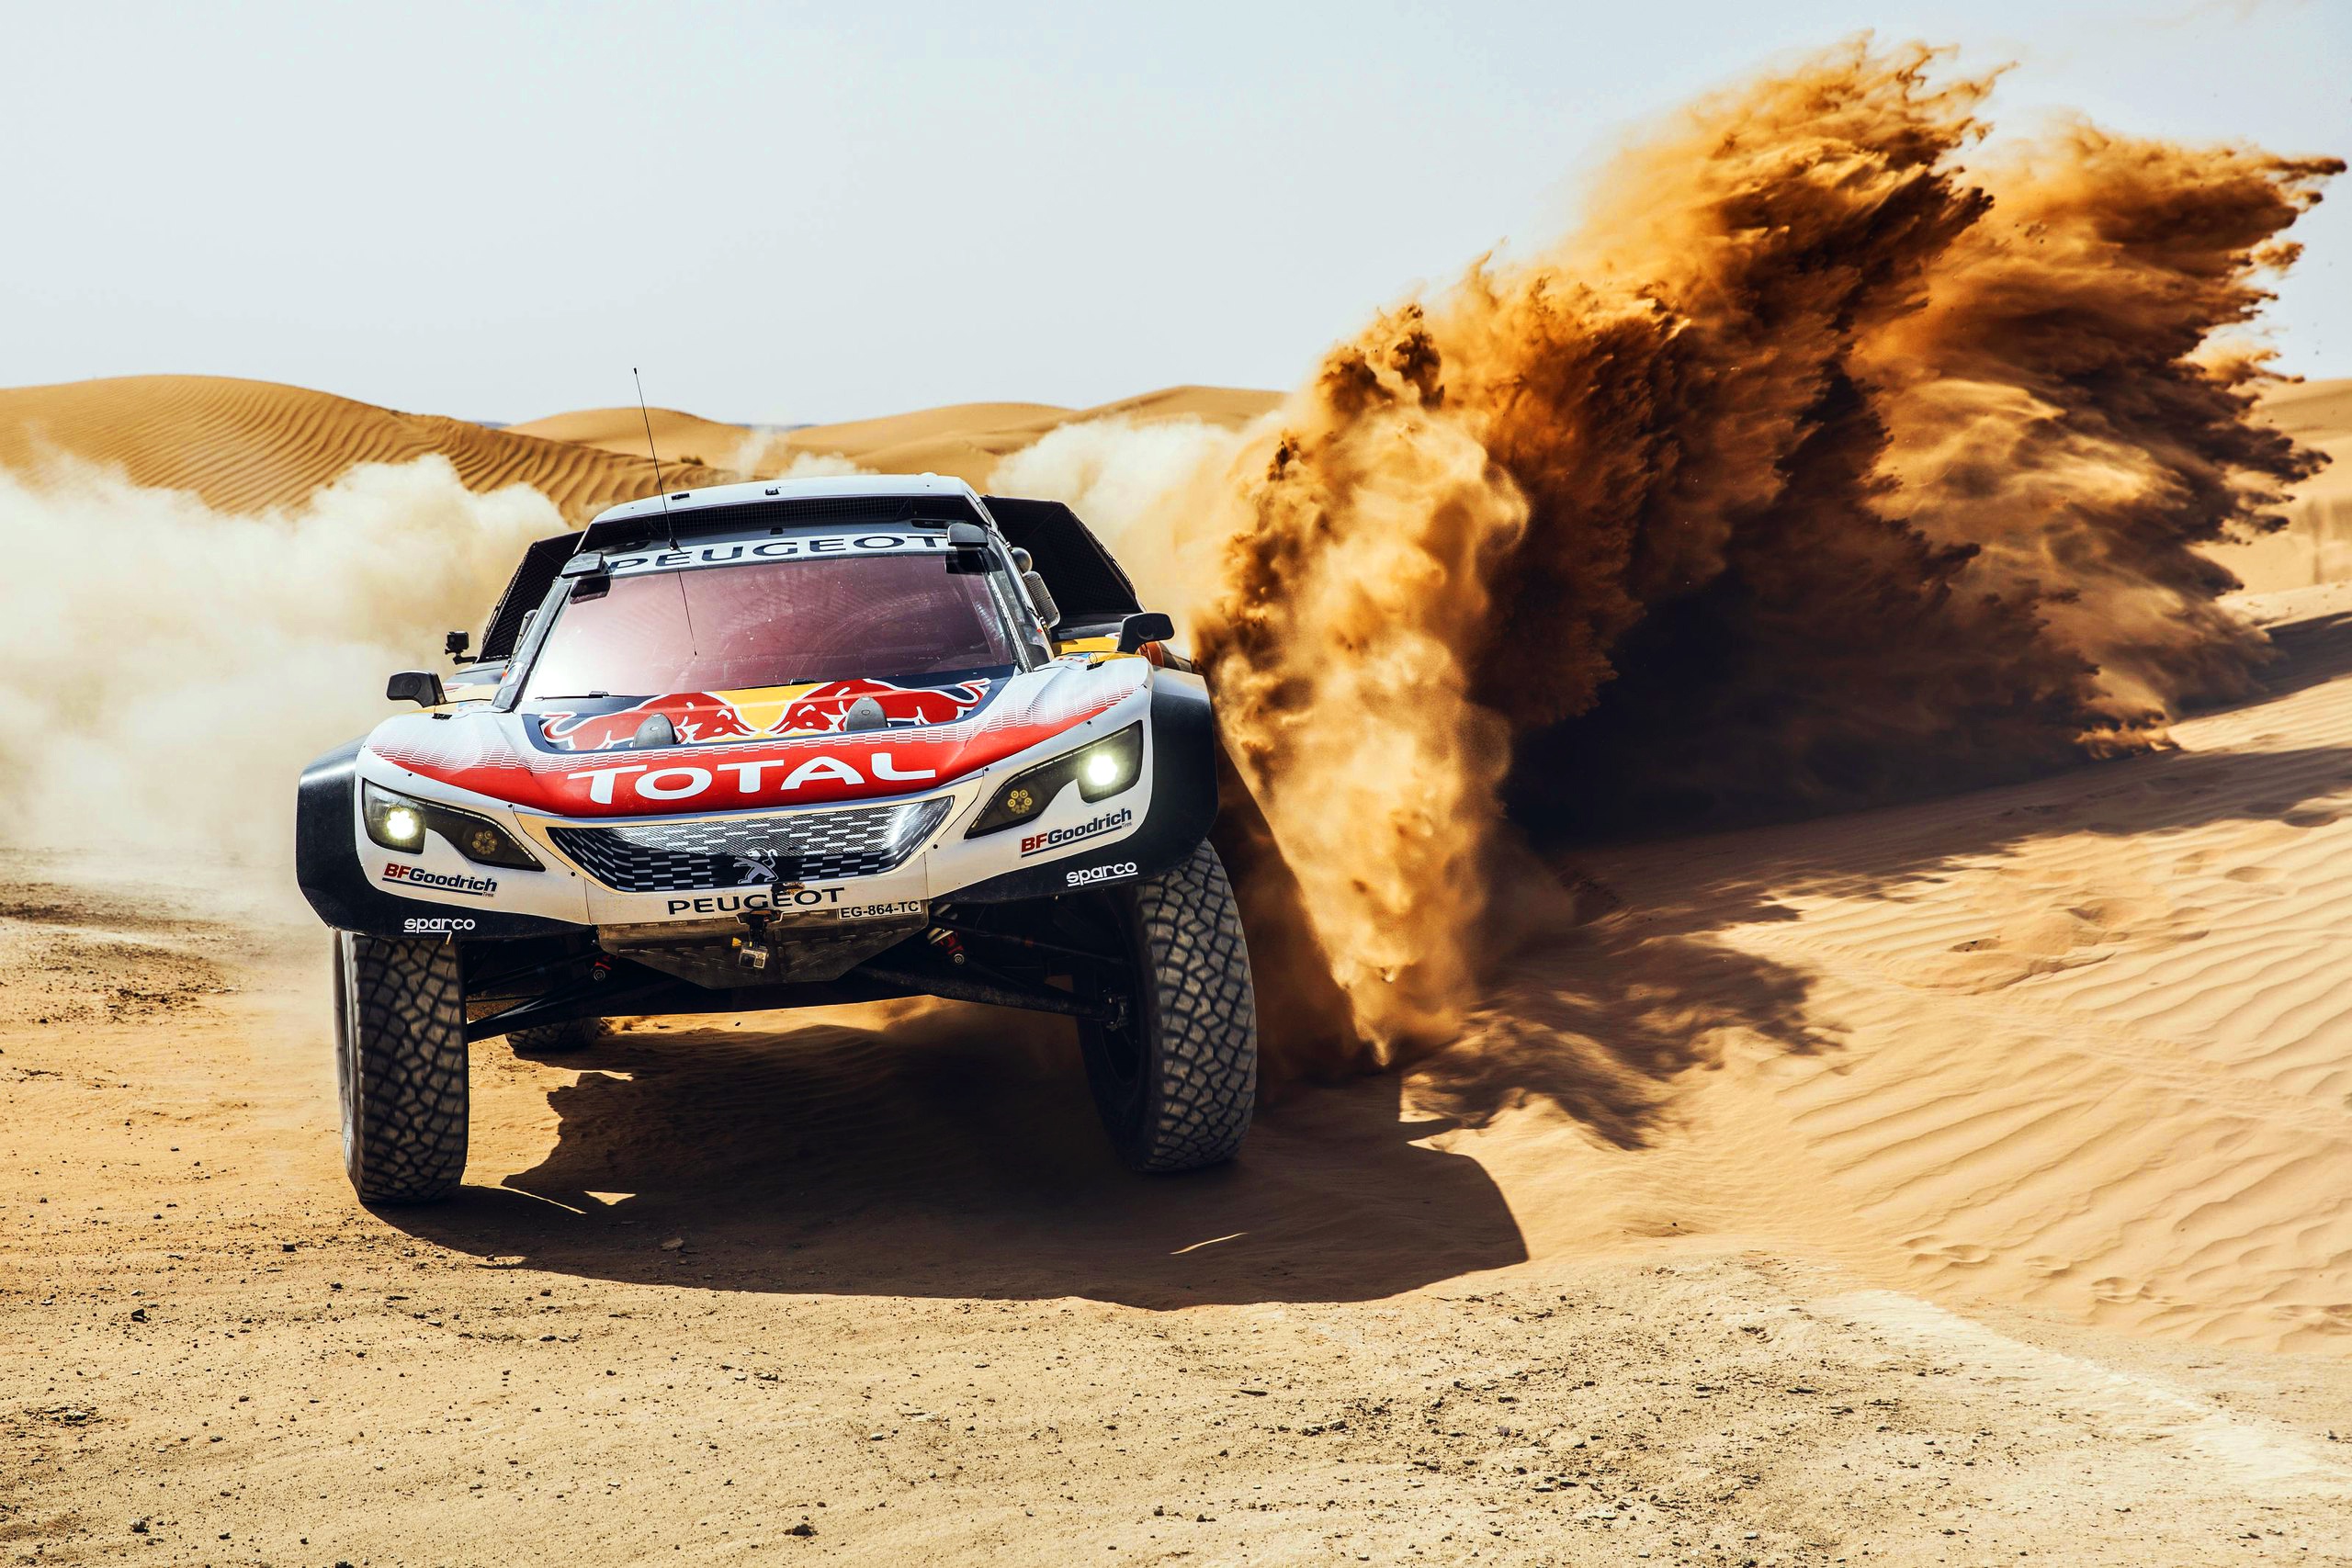 Car Desert Peugeot Race Car Rallying Sand Vehicle 2560x1707